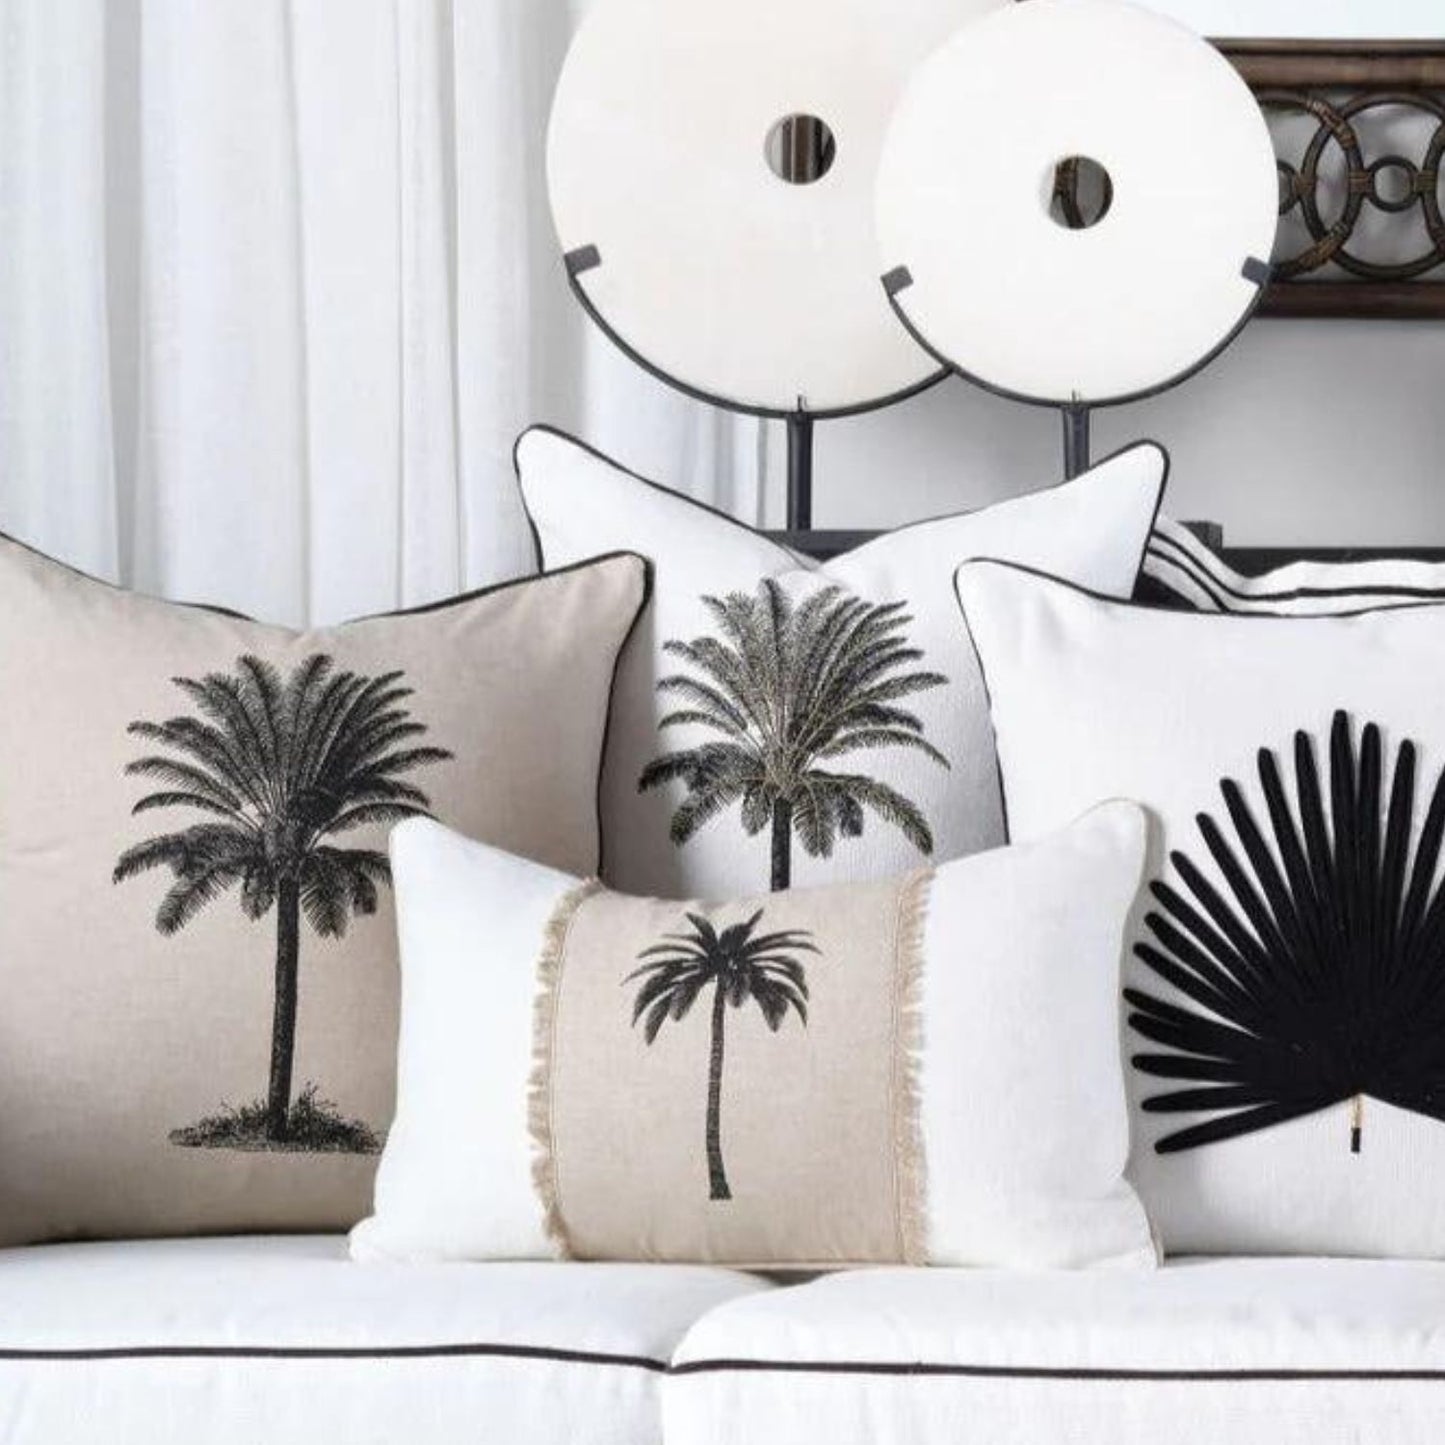 White, black and sand cushion 30x50 Palm coastal lumbar design